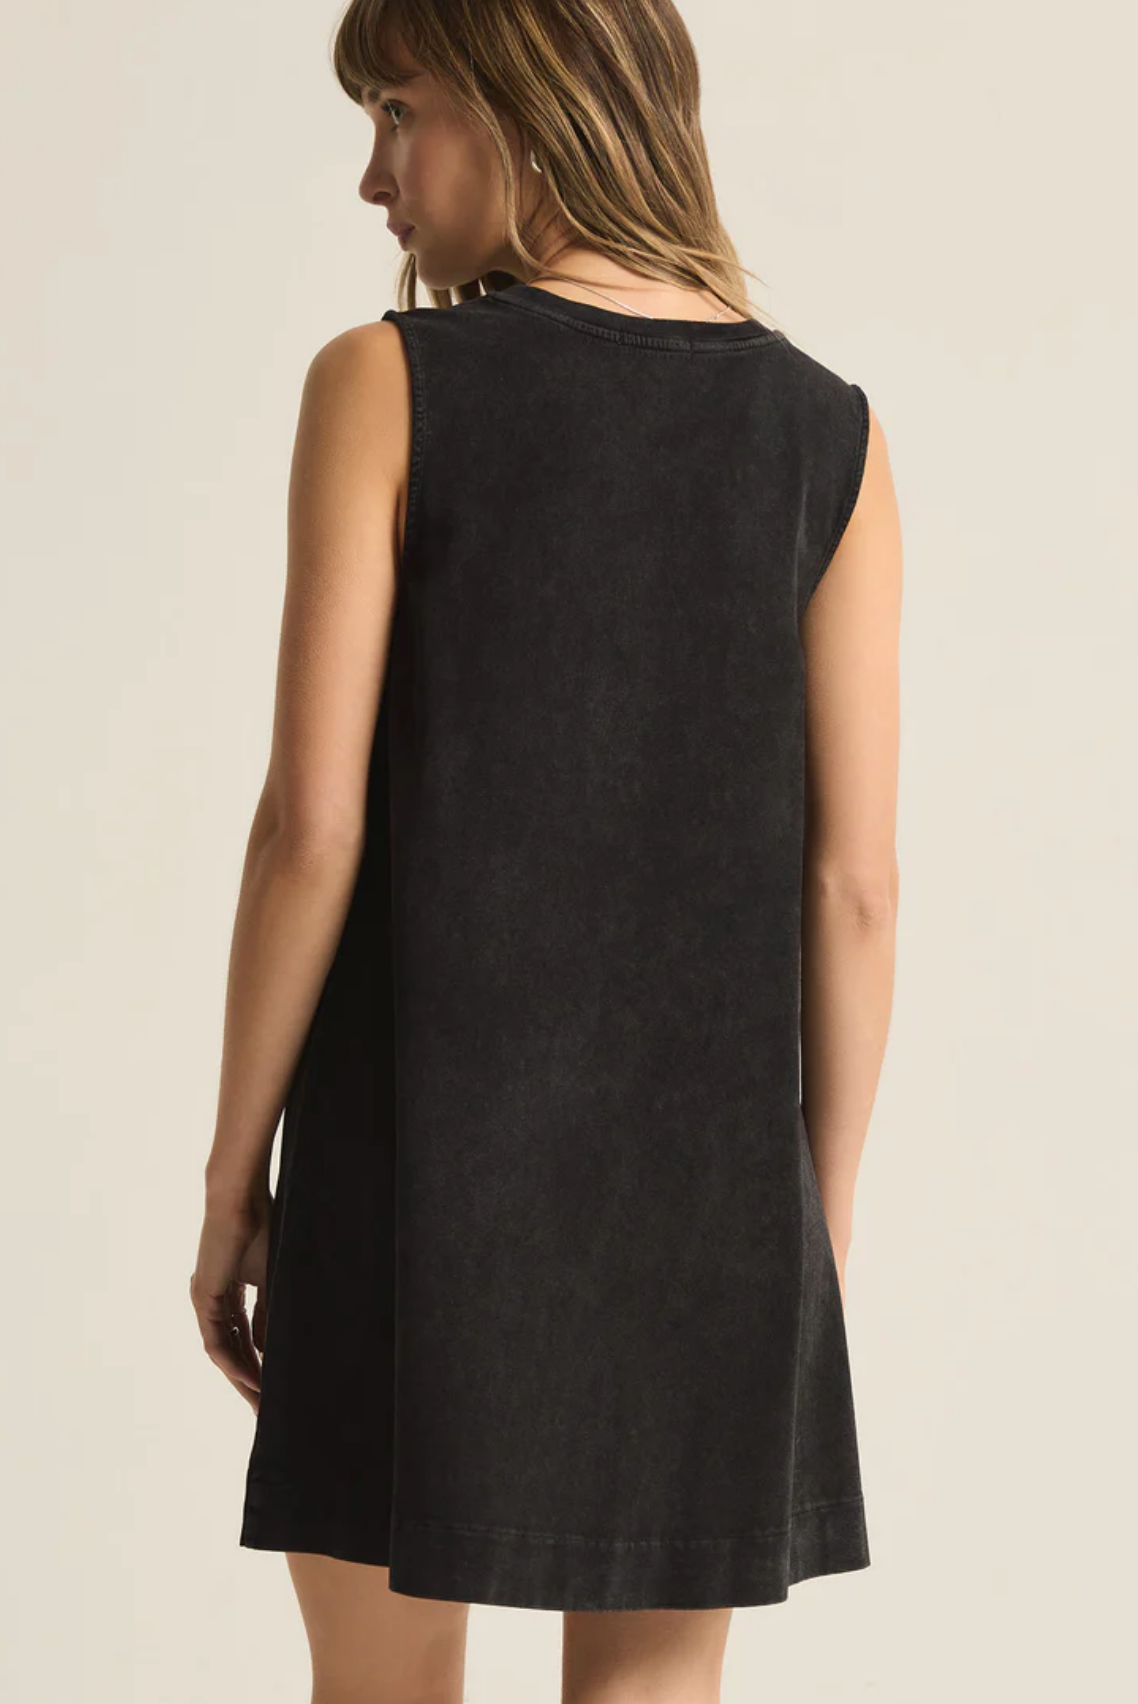 Z Supply Sloane Dress in Washed Black